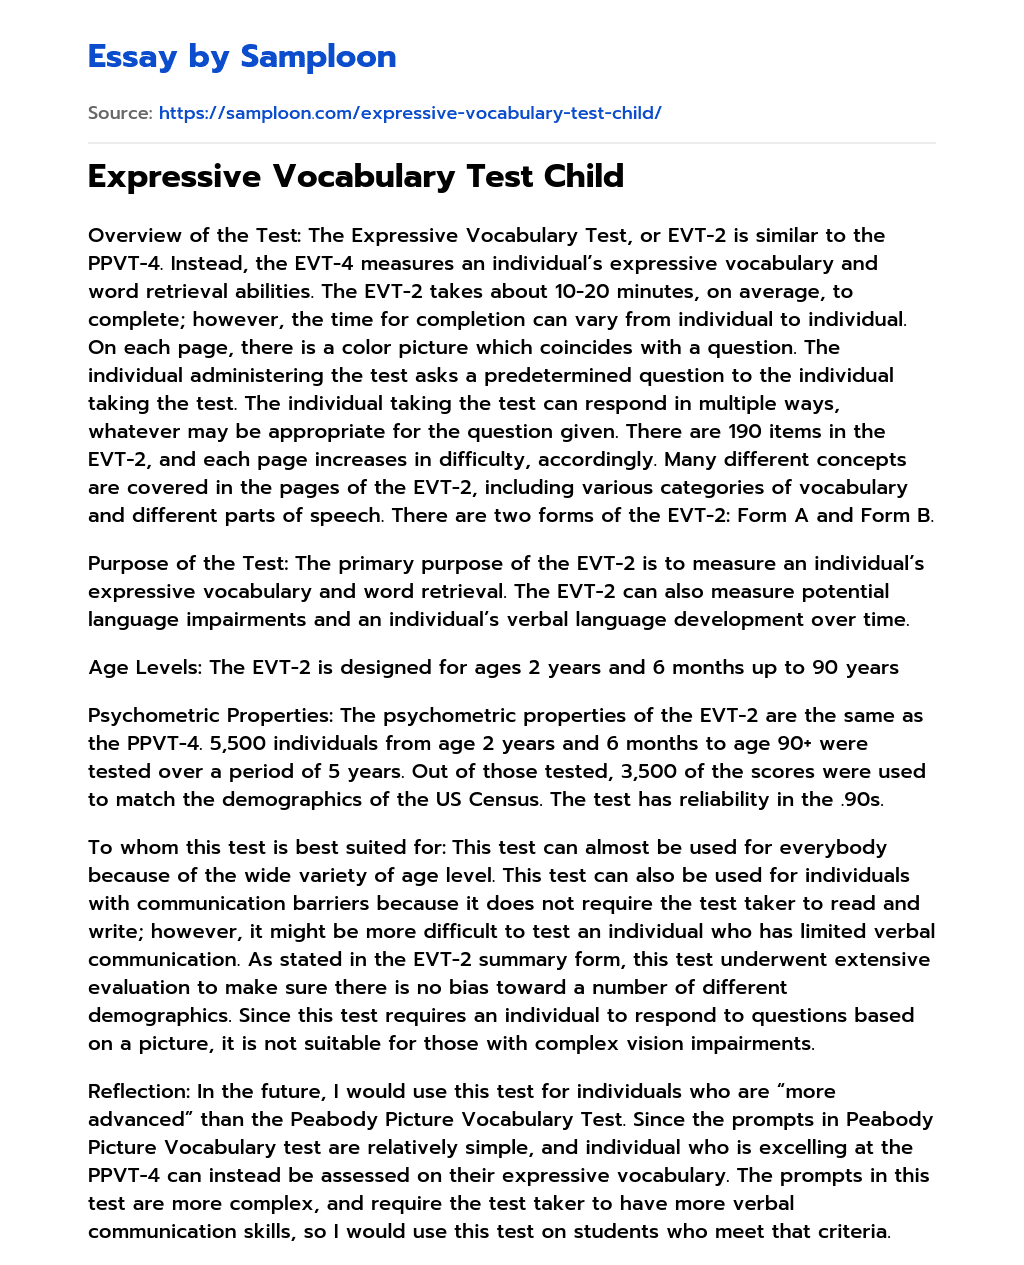 Expressive Vocabulary Test Child essay